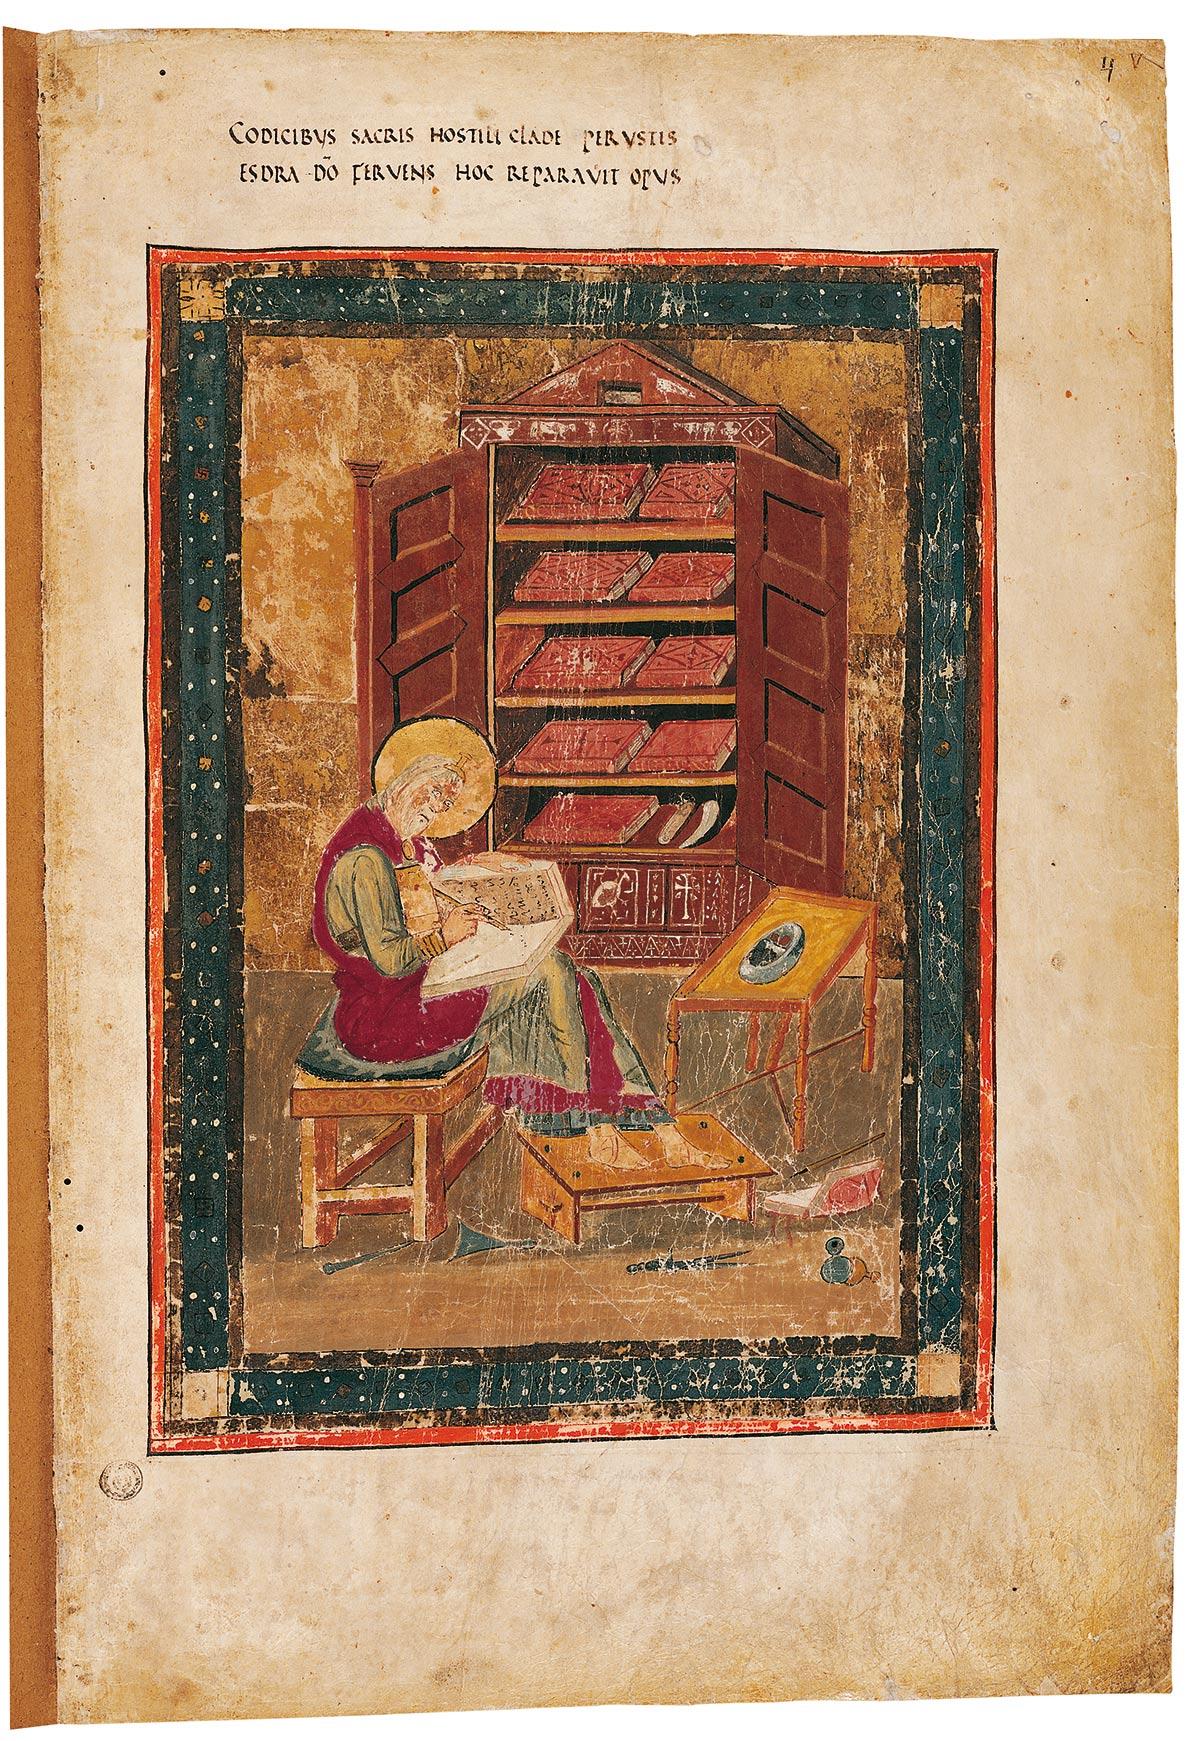 Codex Amiatinus 1, c. Vr, Esdra (692-716; pergamena, 540 x 345 mm; Firenze, Biblioteca Medicea Laurenziana)